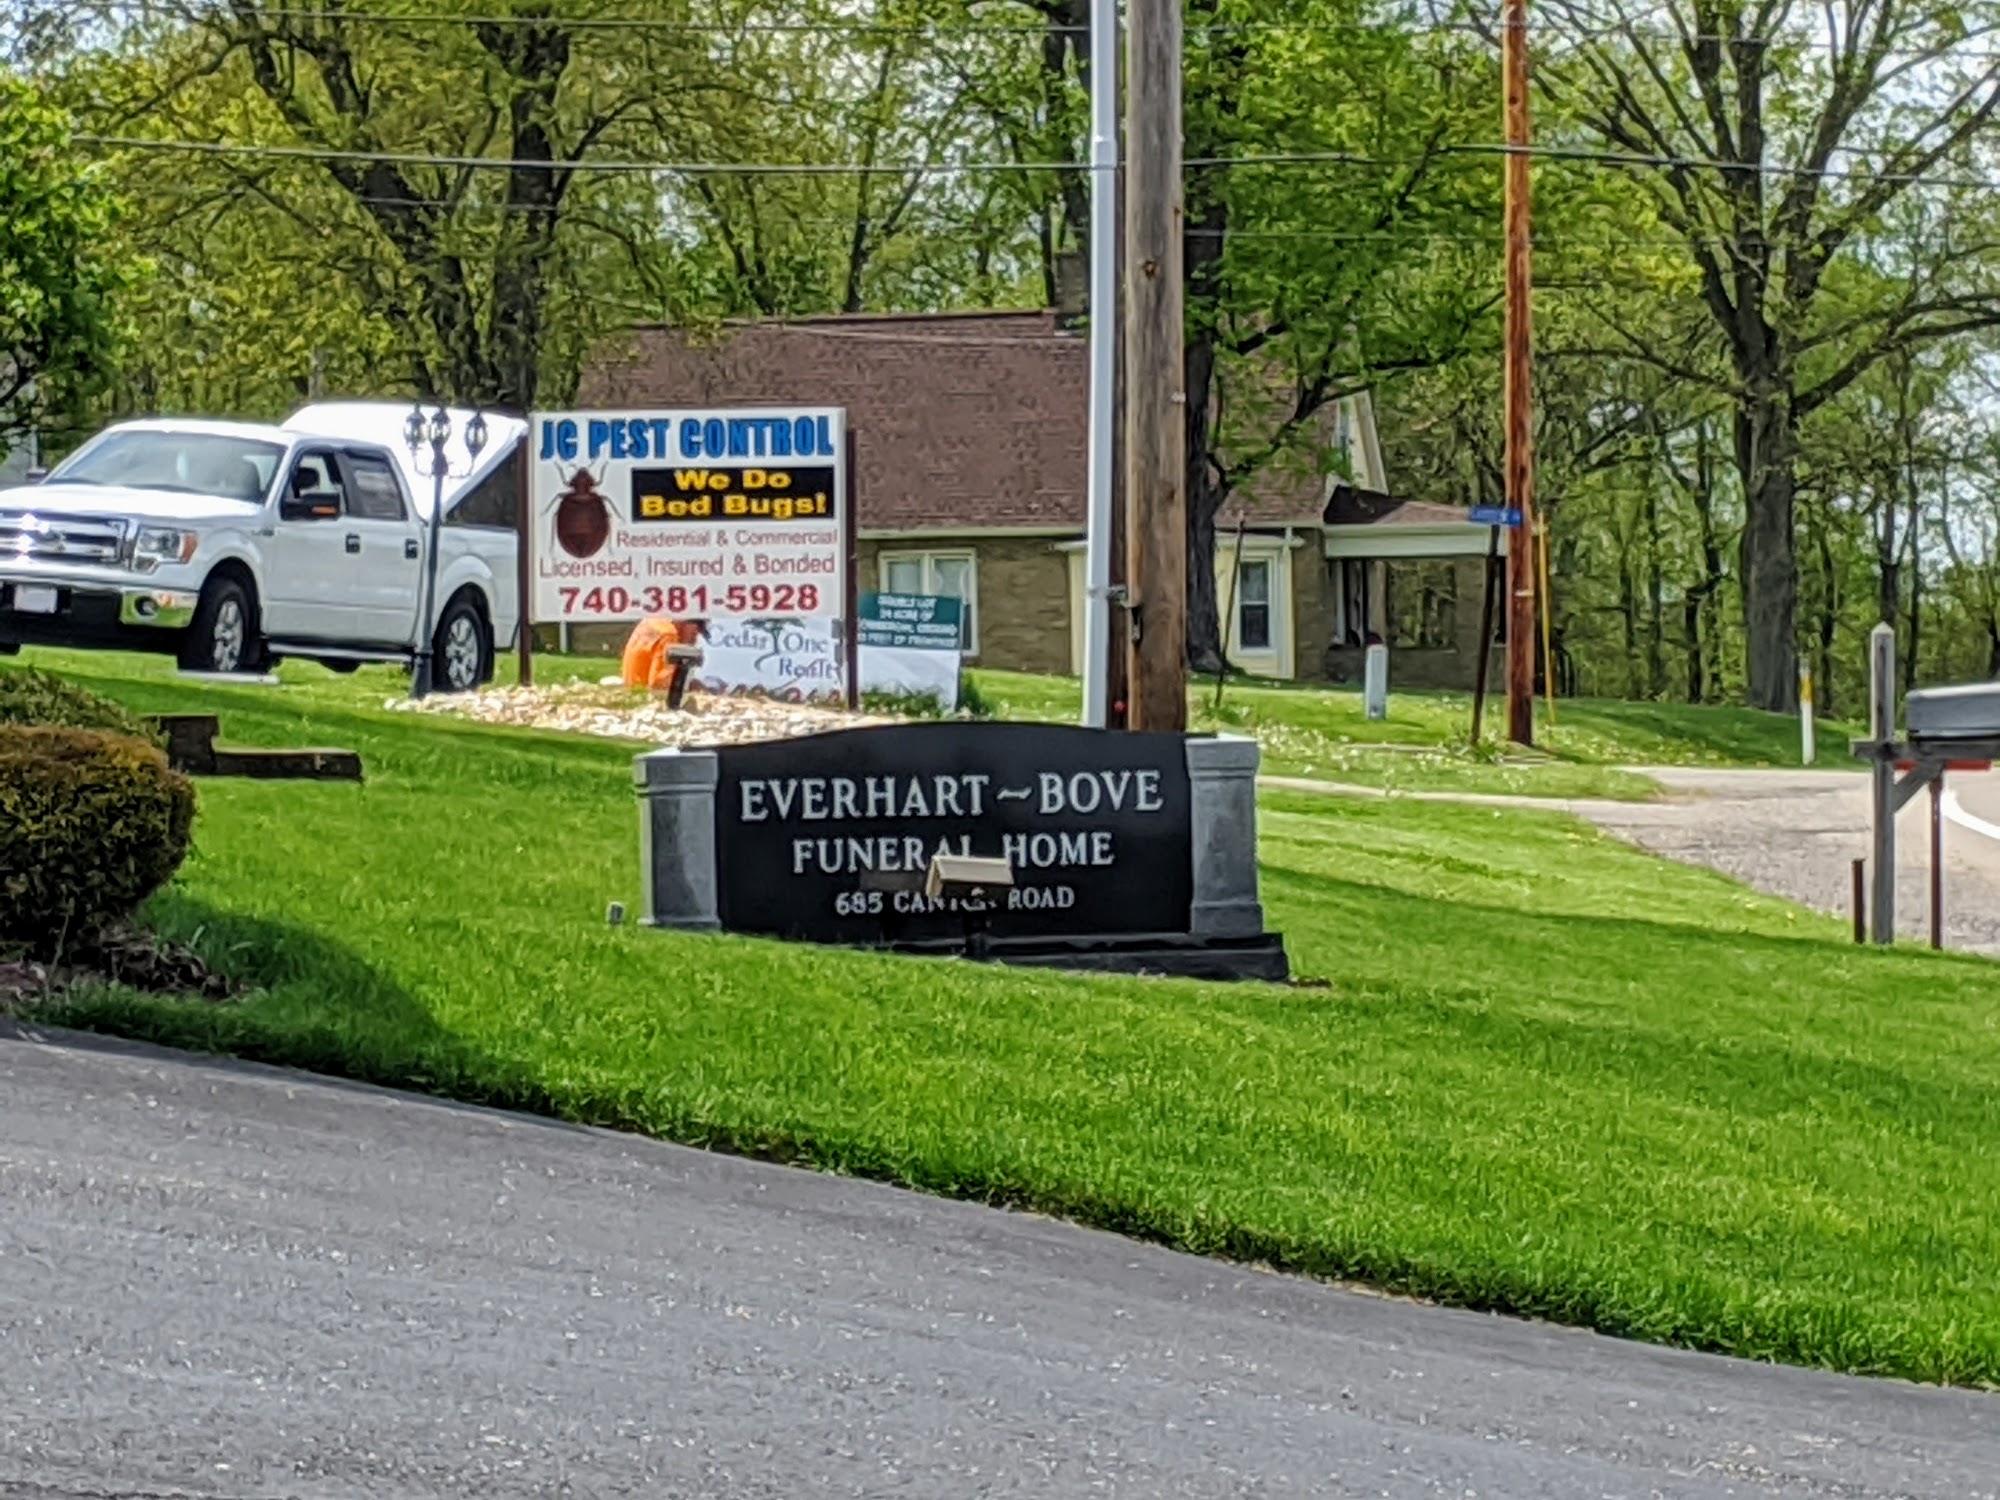 Everhart-Bove Funeral Home 685 Canton Rd, Wintersville Ohio 43953